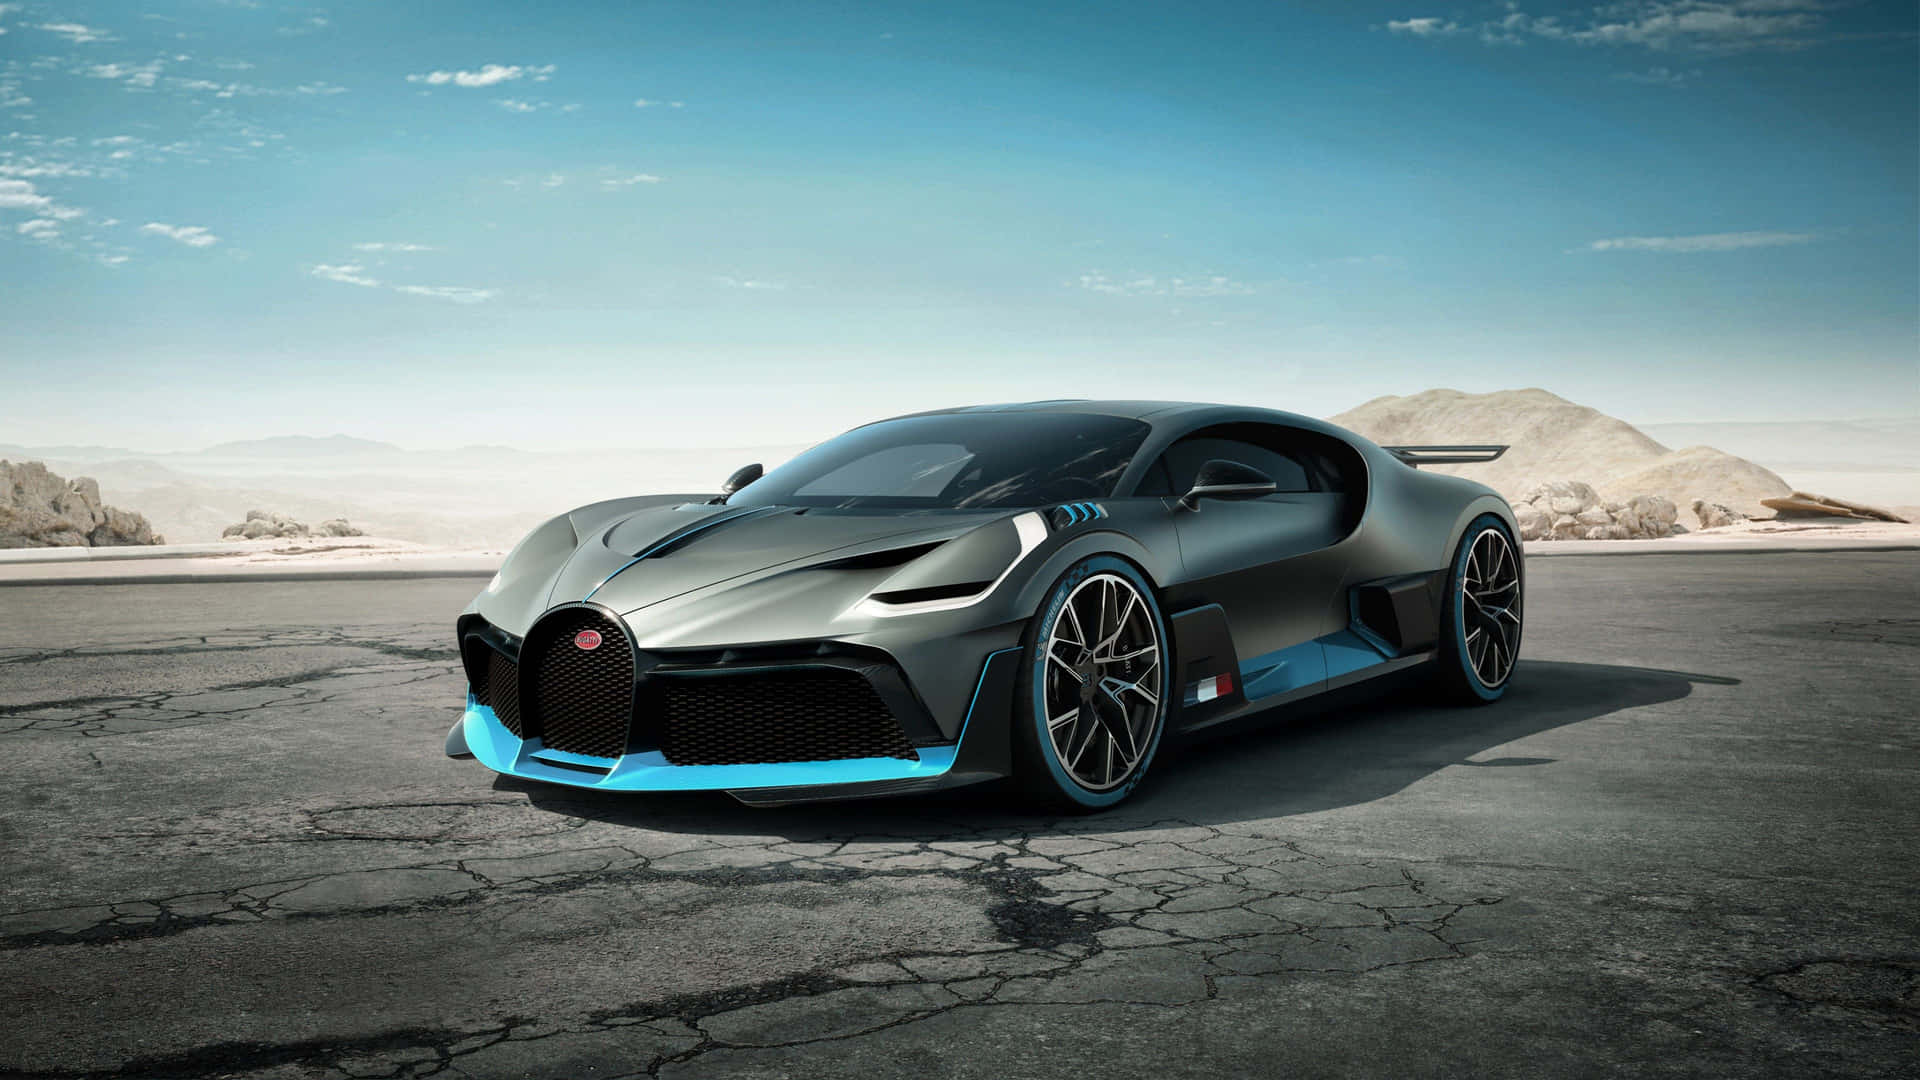 The Bugatti Chiron Concept Is Shown In The Desert Wallpaper